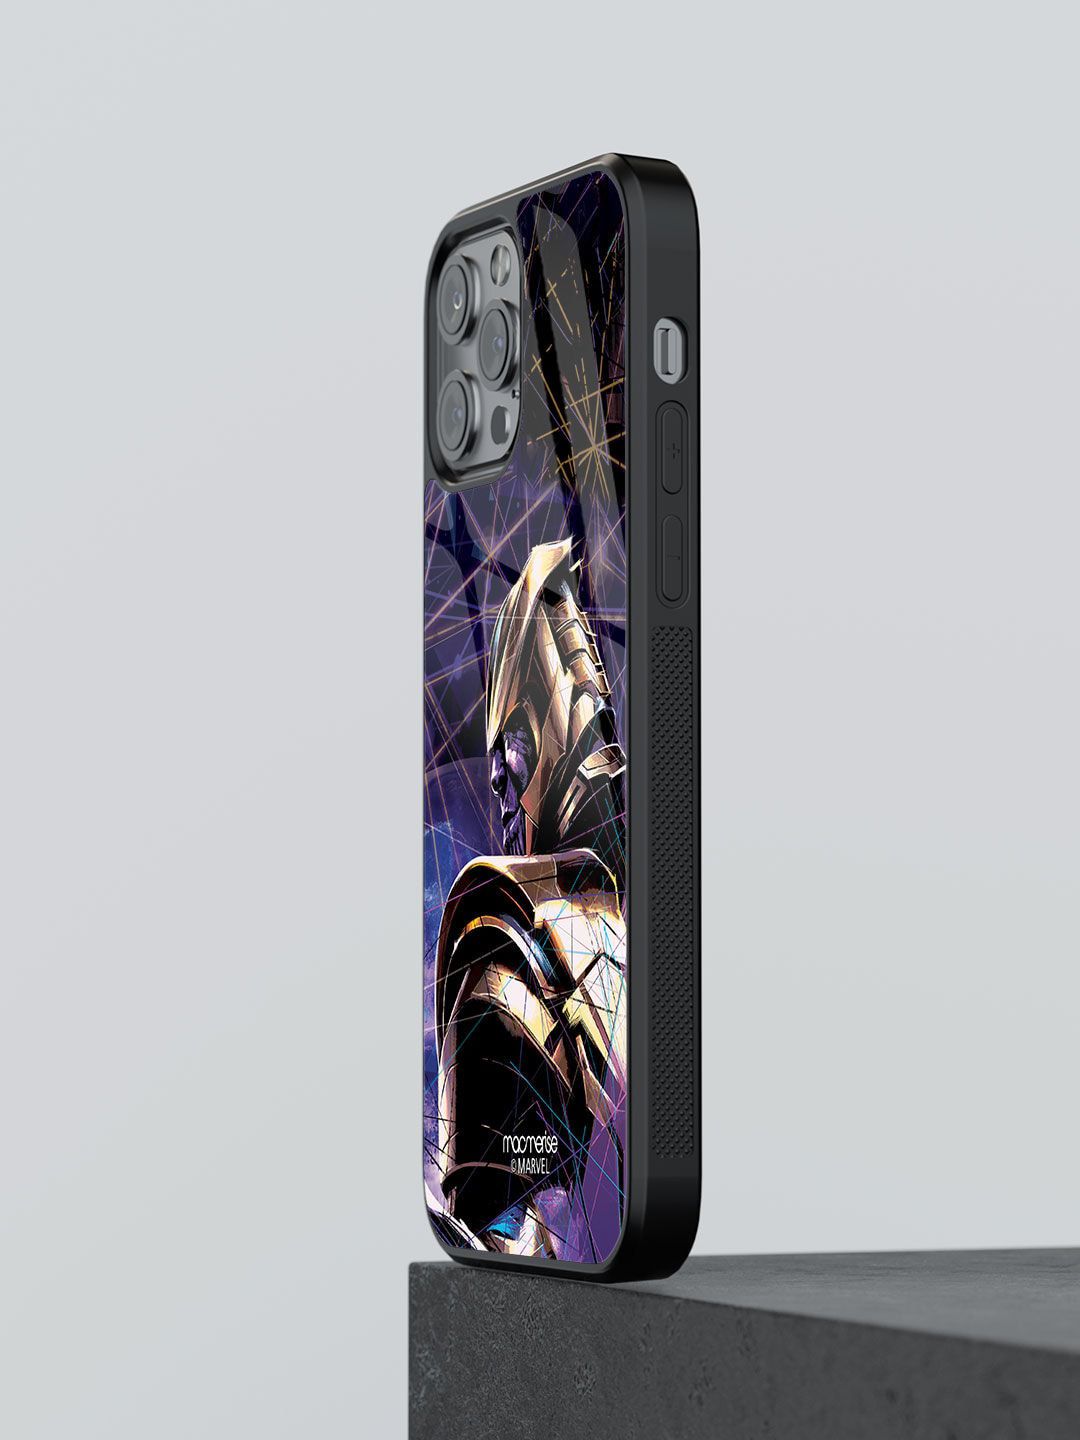 macmerise Purple Printed Glass iPhone 12 Pro Back Case Price in India